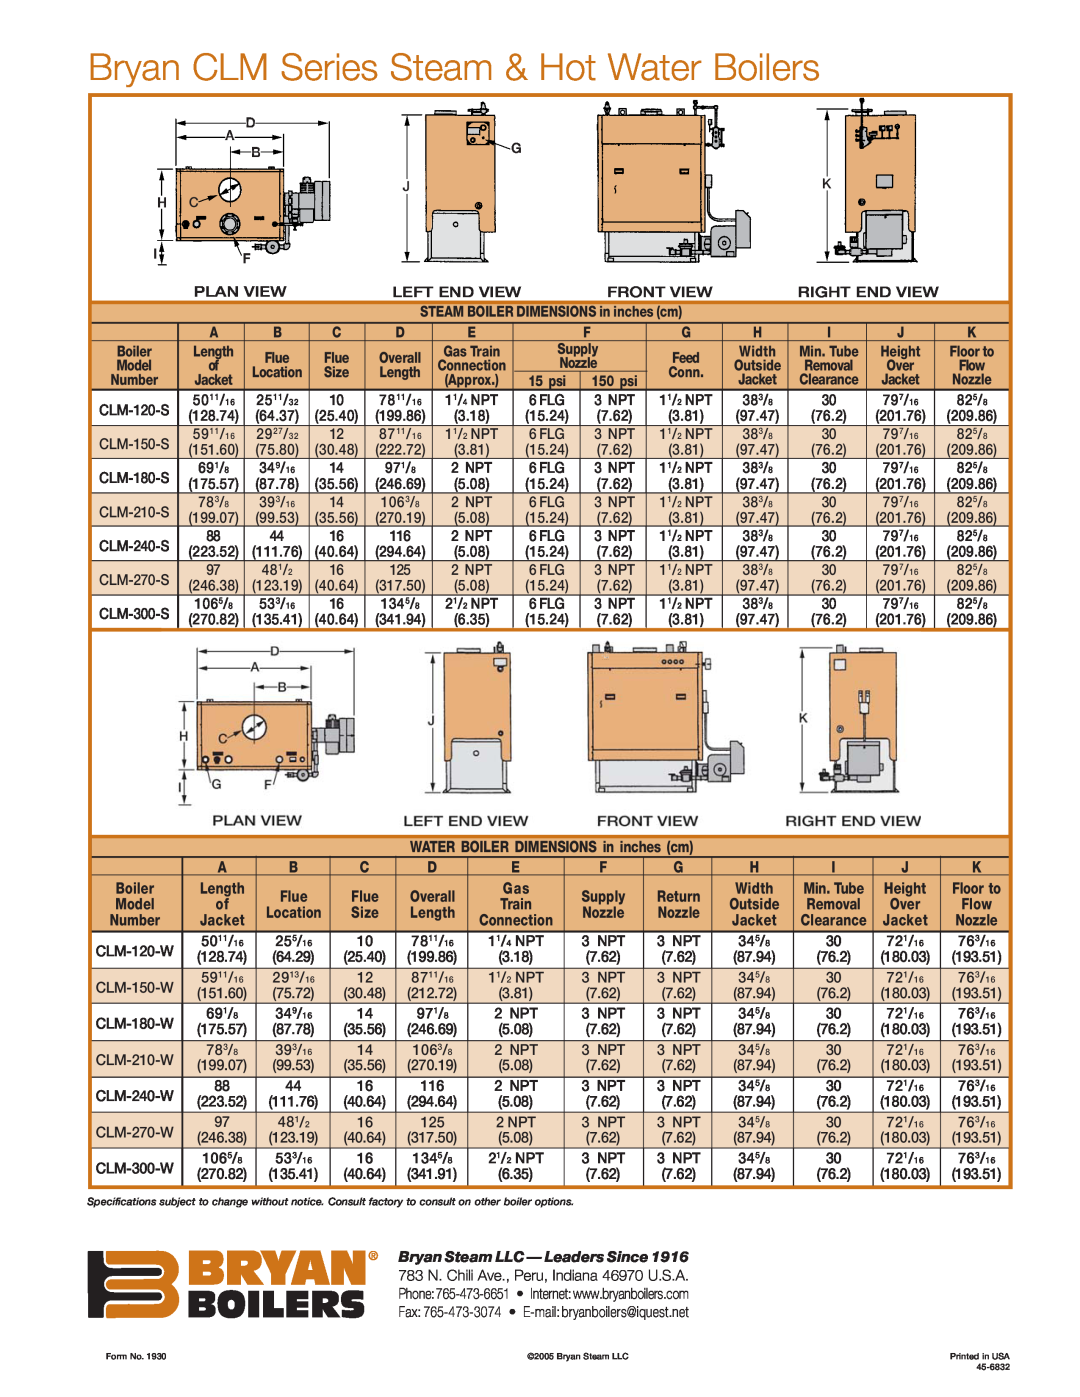 Bryan Boilers manual Bryan CLM Series Steam & Hot Water Boilers, WATER BOILER DIMENSIONS in inches cm, Overall, Length 